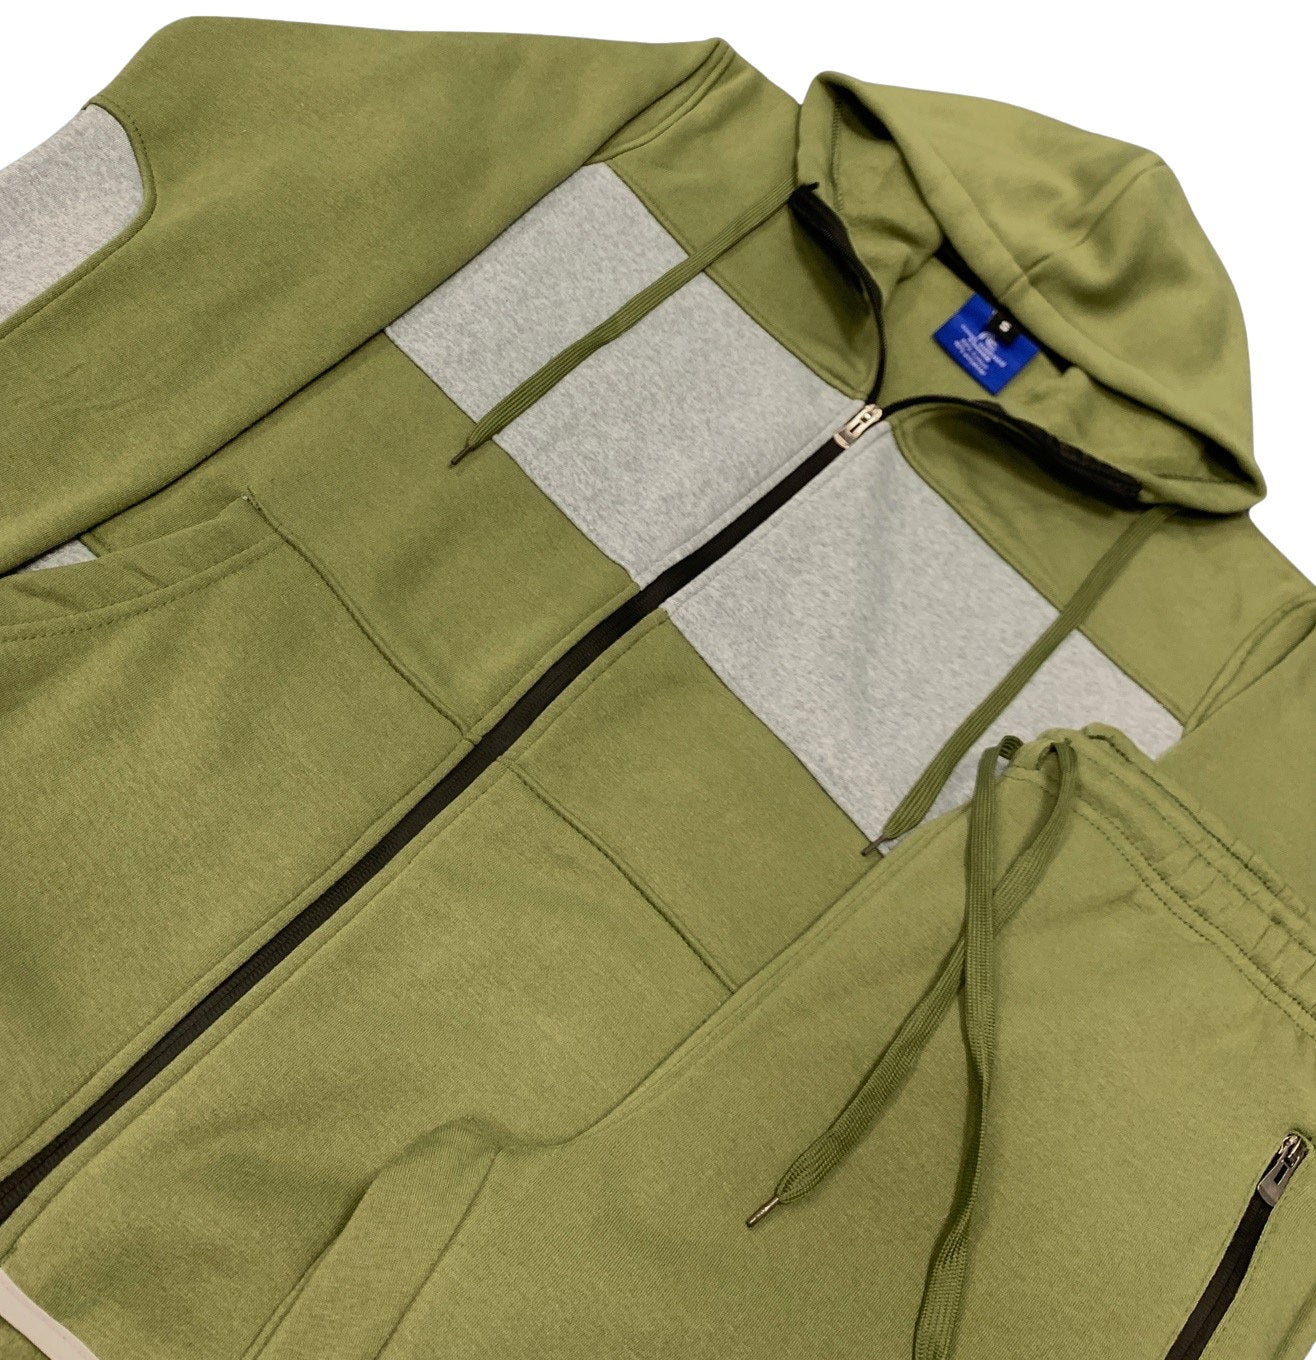 Men’s Full Sweatsuit Cloud Fleece Sweat jacket with Warm winter Sweat pants Matching Suit Outfit